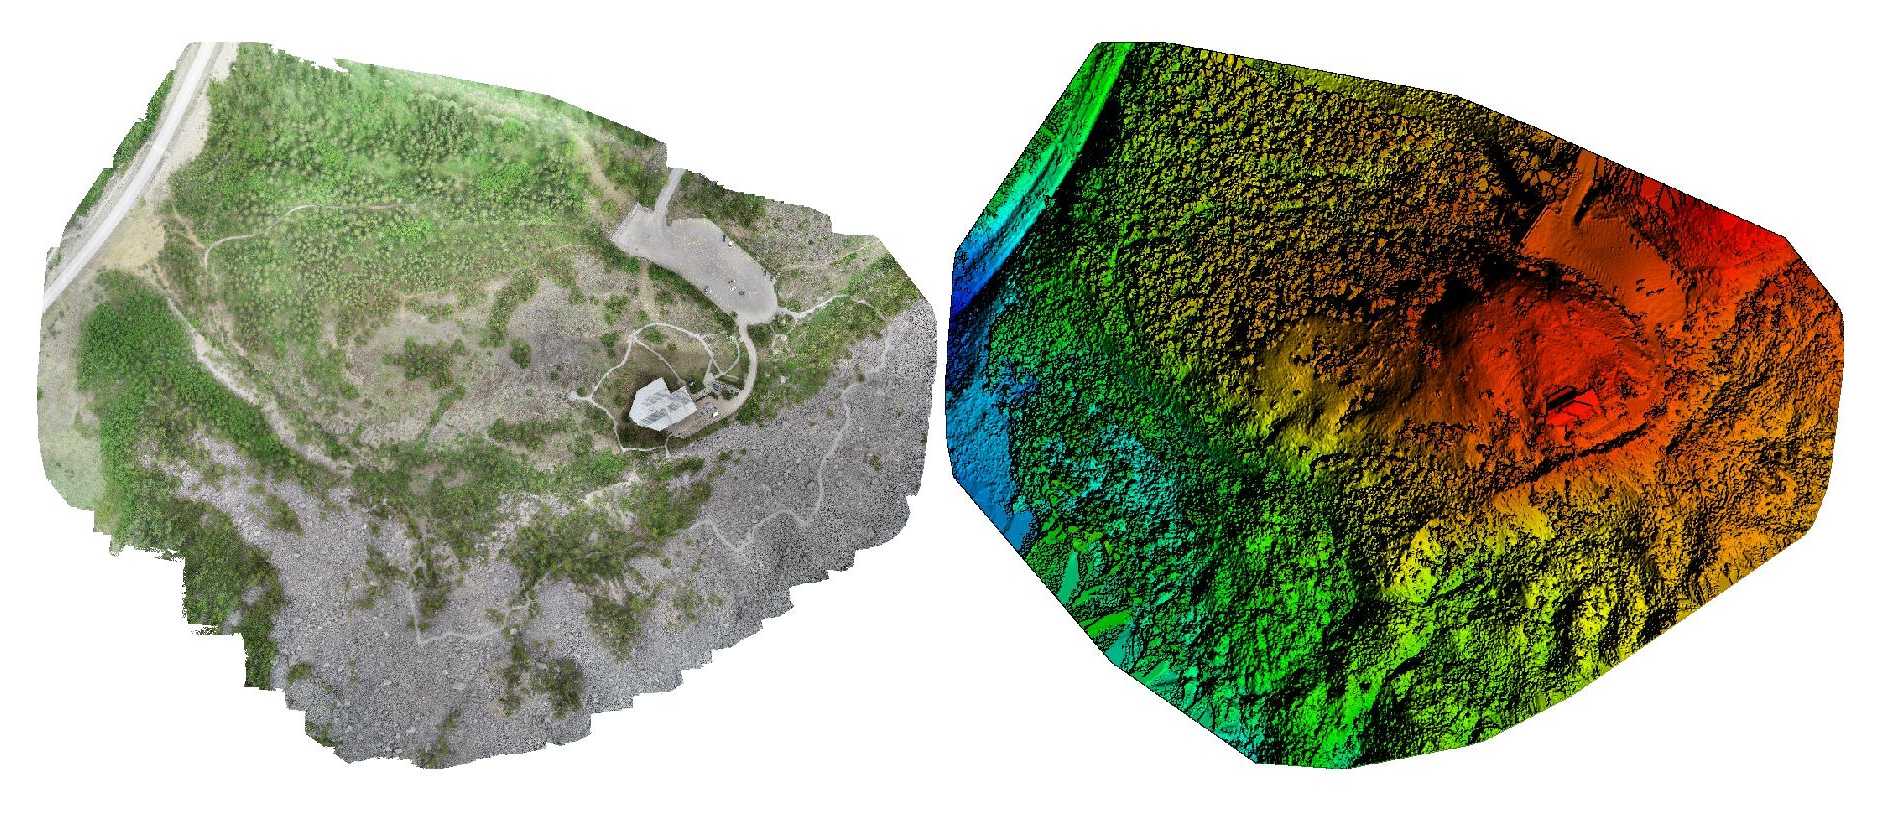 Orthomosaic and Digital Surface Model (DSM) imagery from UAV photogrammetric data